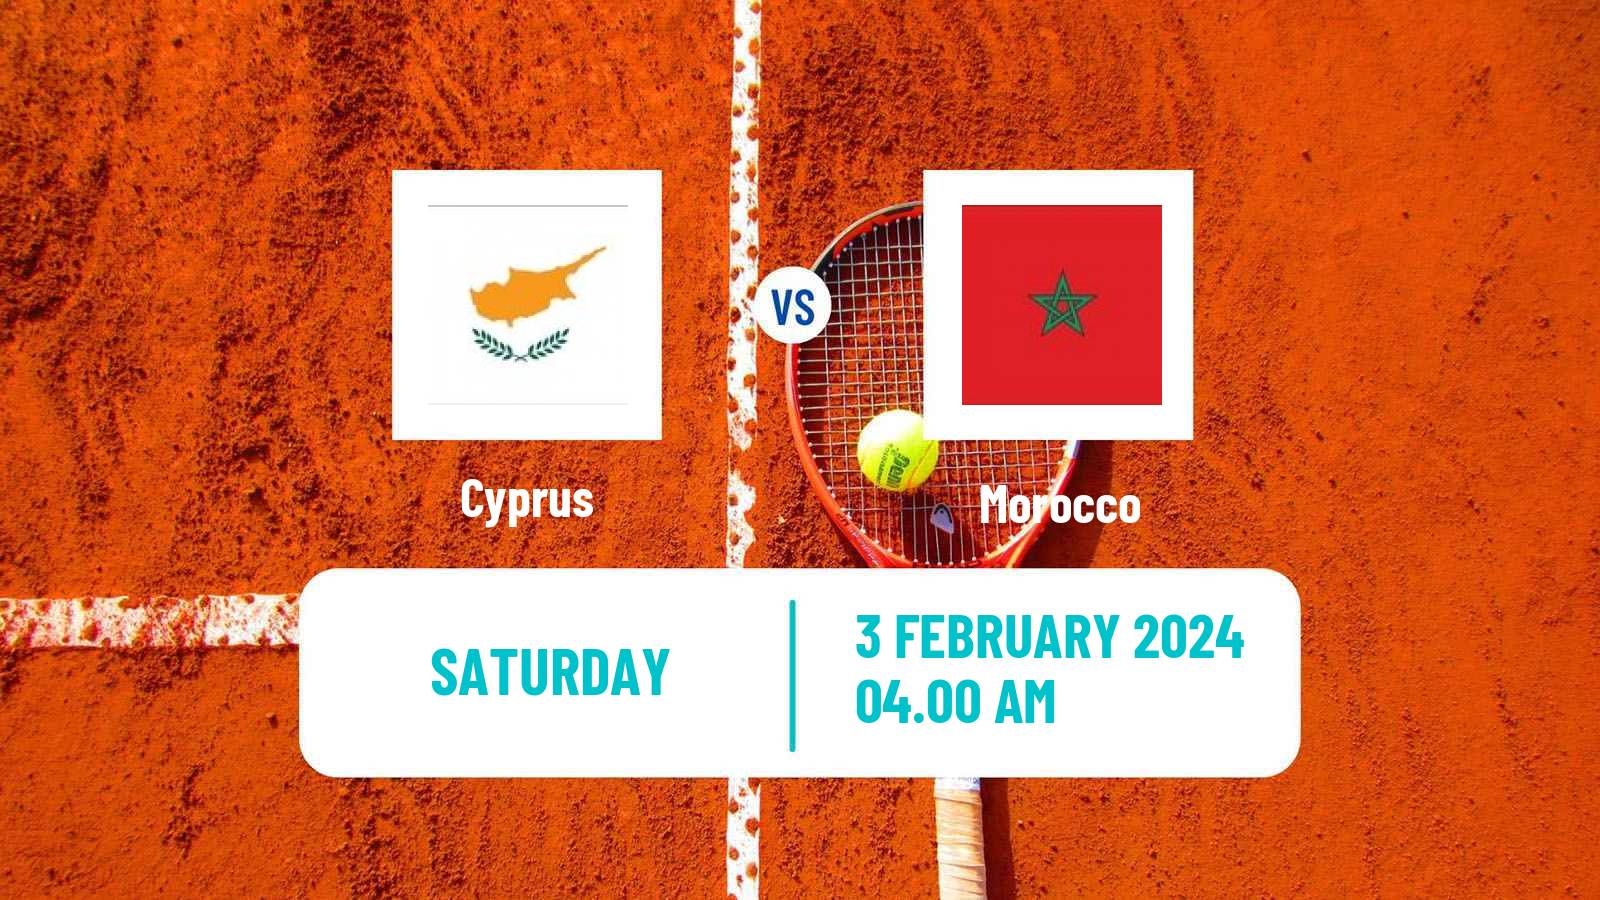 Tennis Davis Cup World Group II Teams Cyprus - Morocco